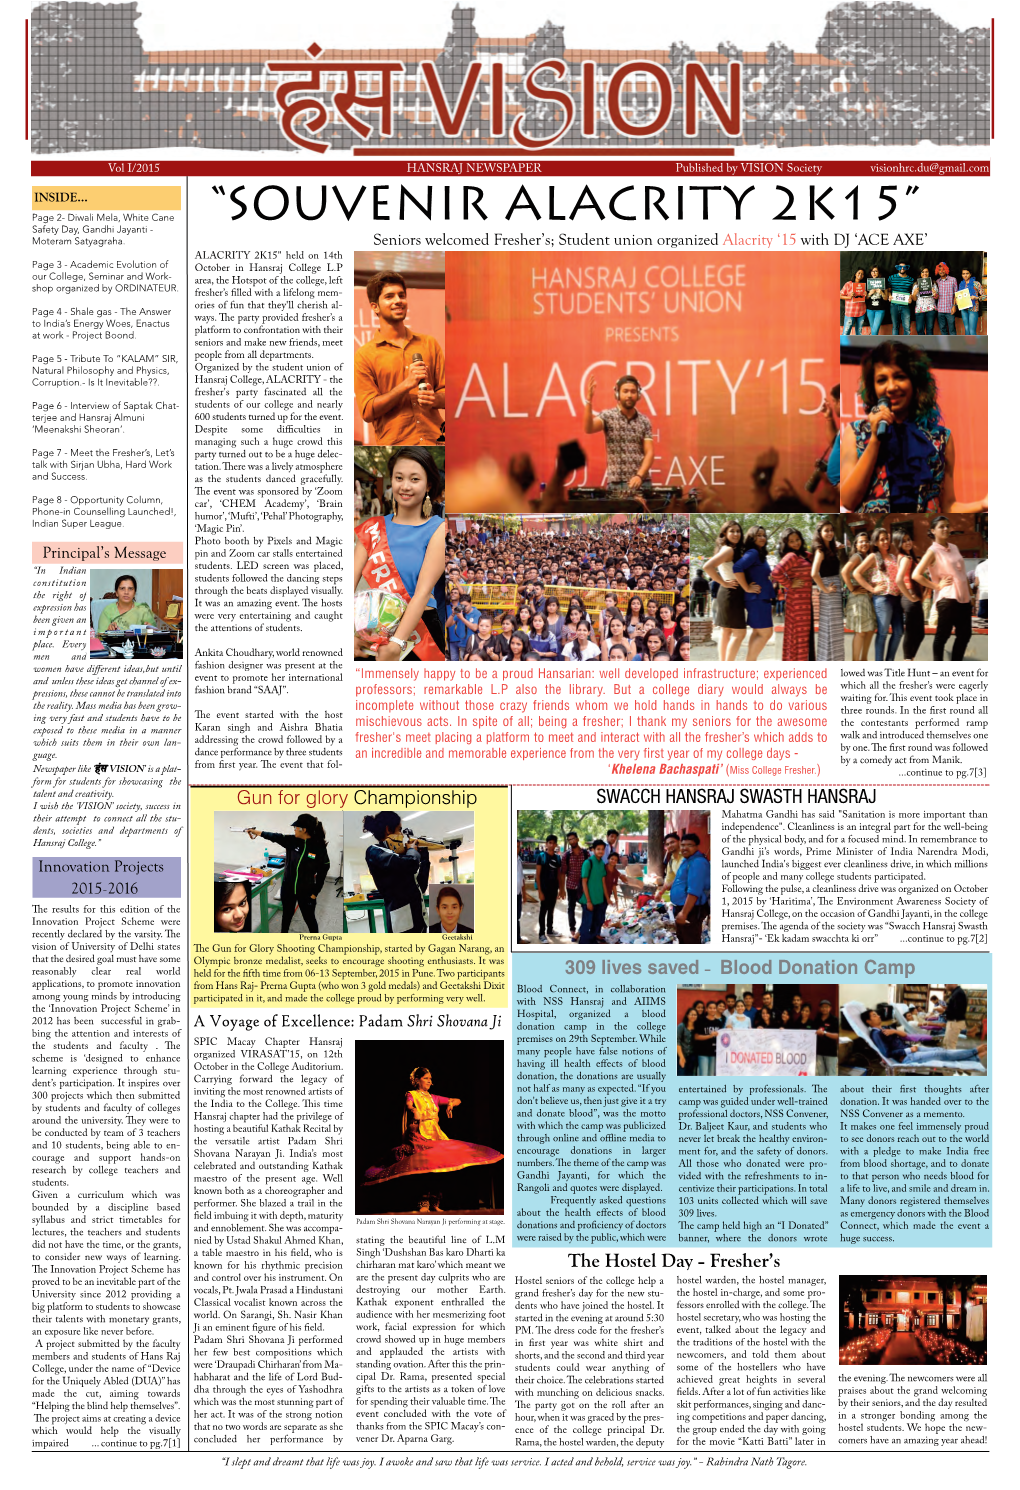 “SOUVENIR ALACRITY 2K15” Page 2- Diwali Mela, White Cane Safety Day, Gandhi Jayanti - Moteram Satyagraha